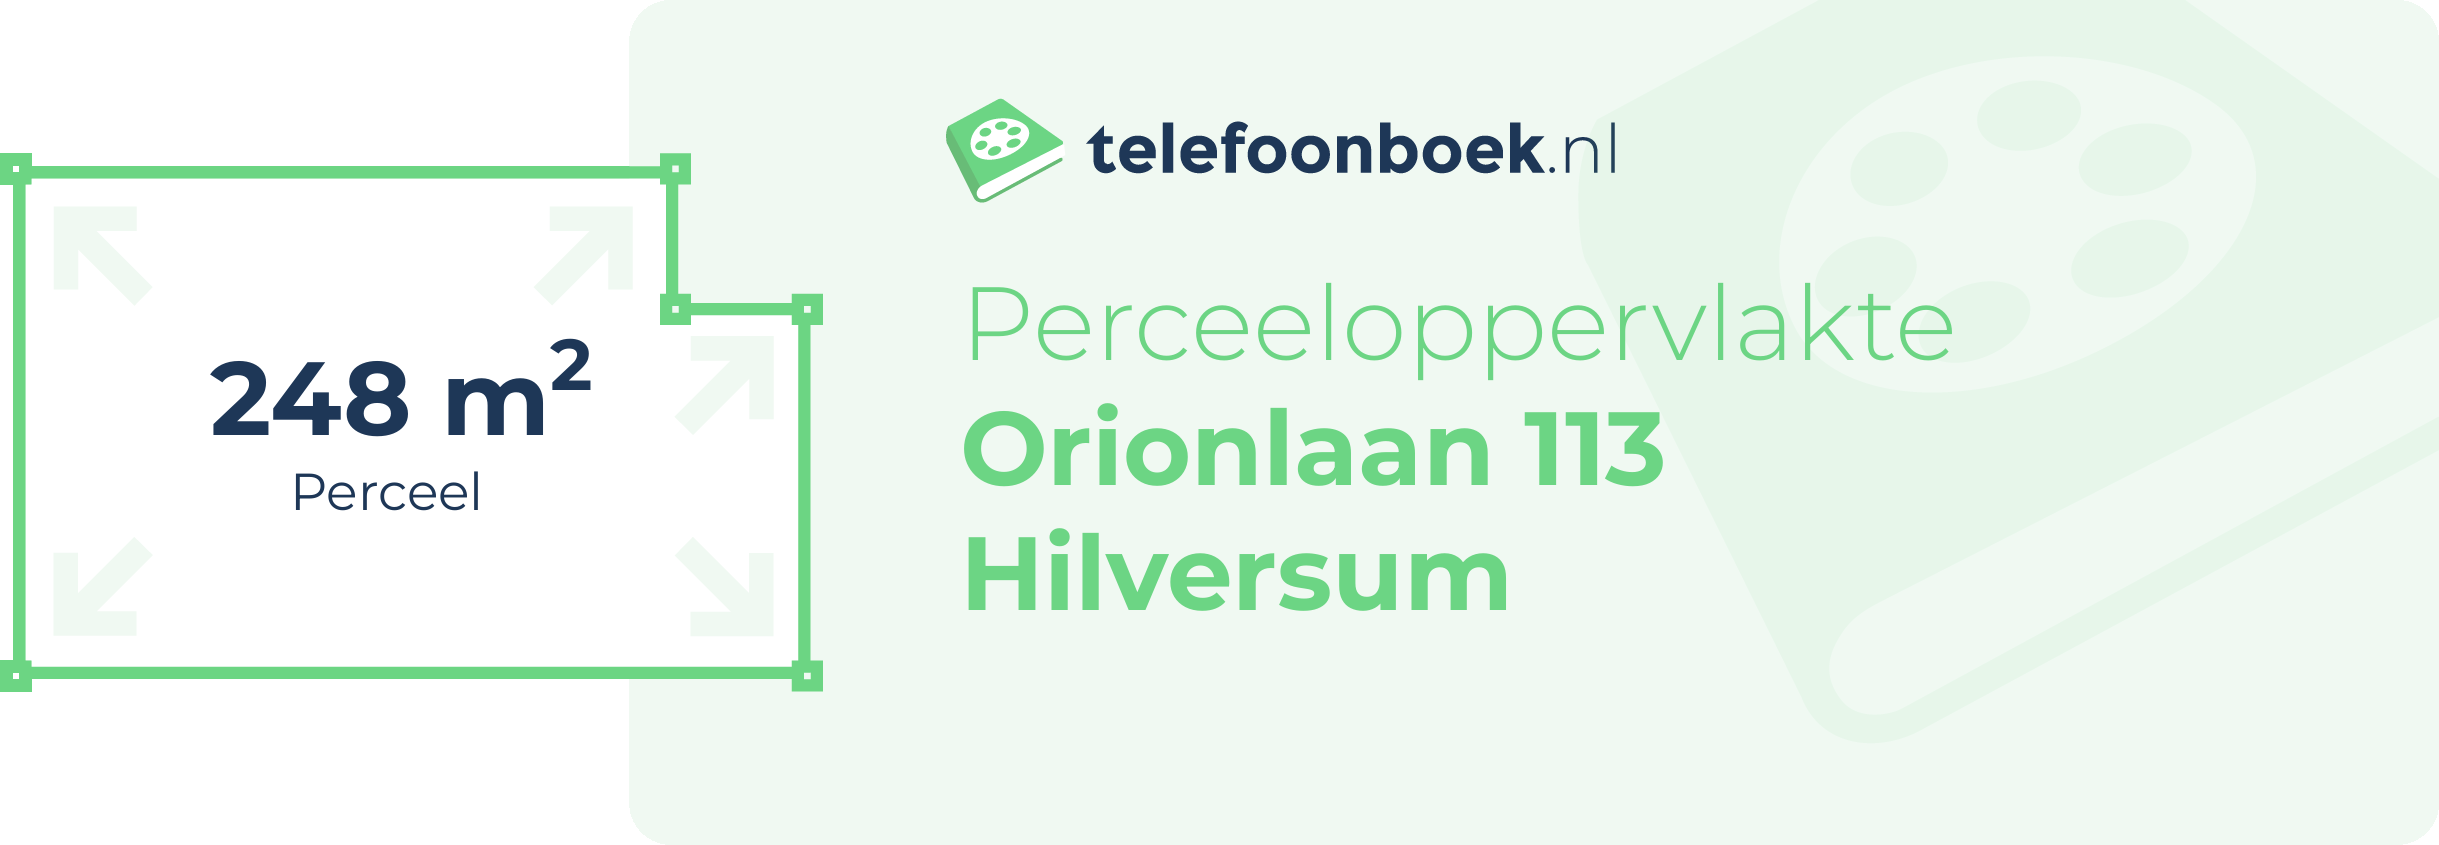 Perceeloppervlakte Orionlaan 113 Hilversum